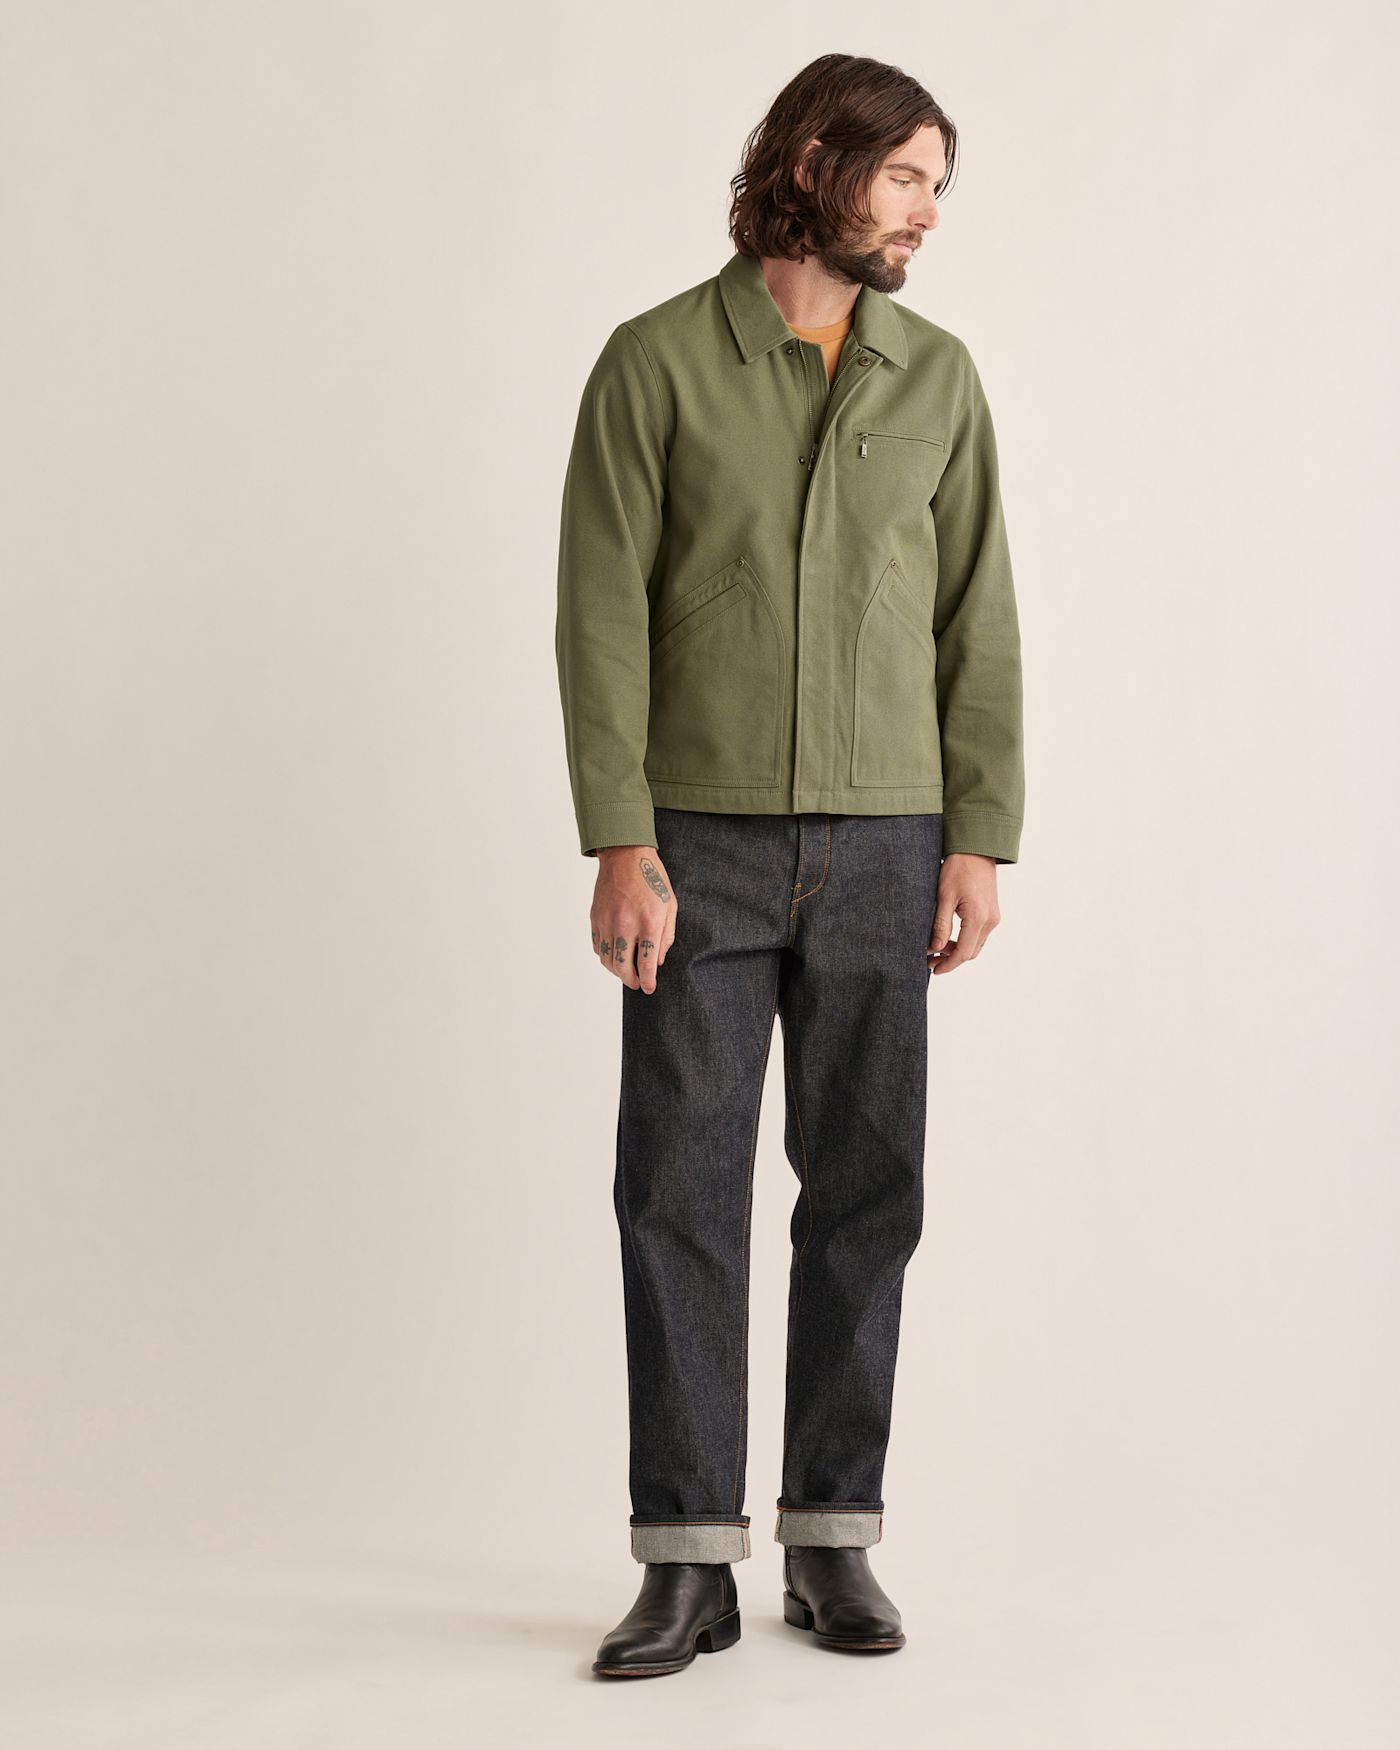 Men's Jackets & Coats | Pendleton